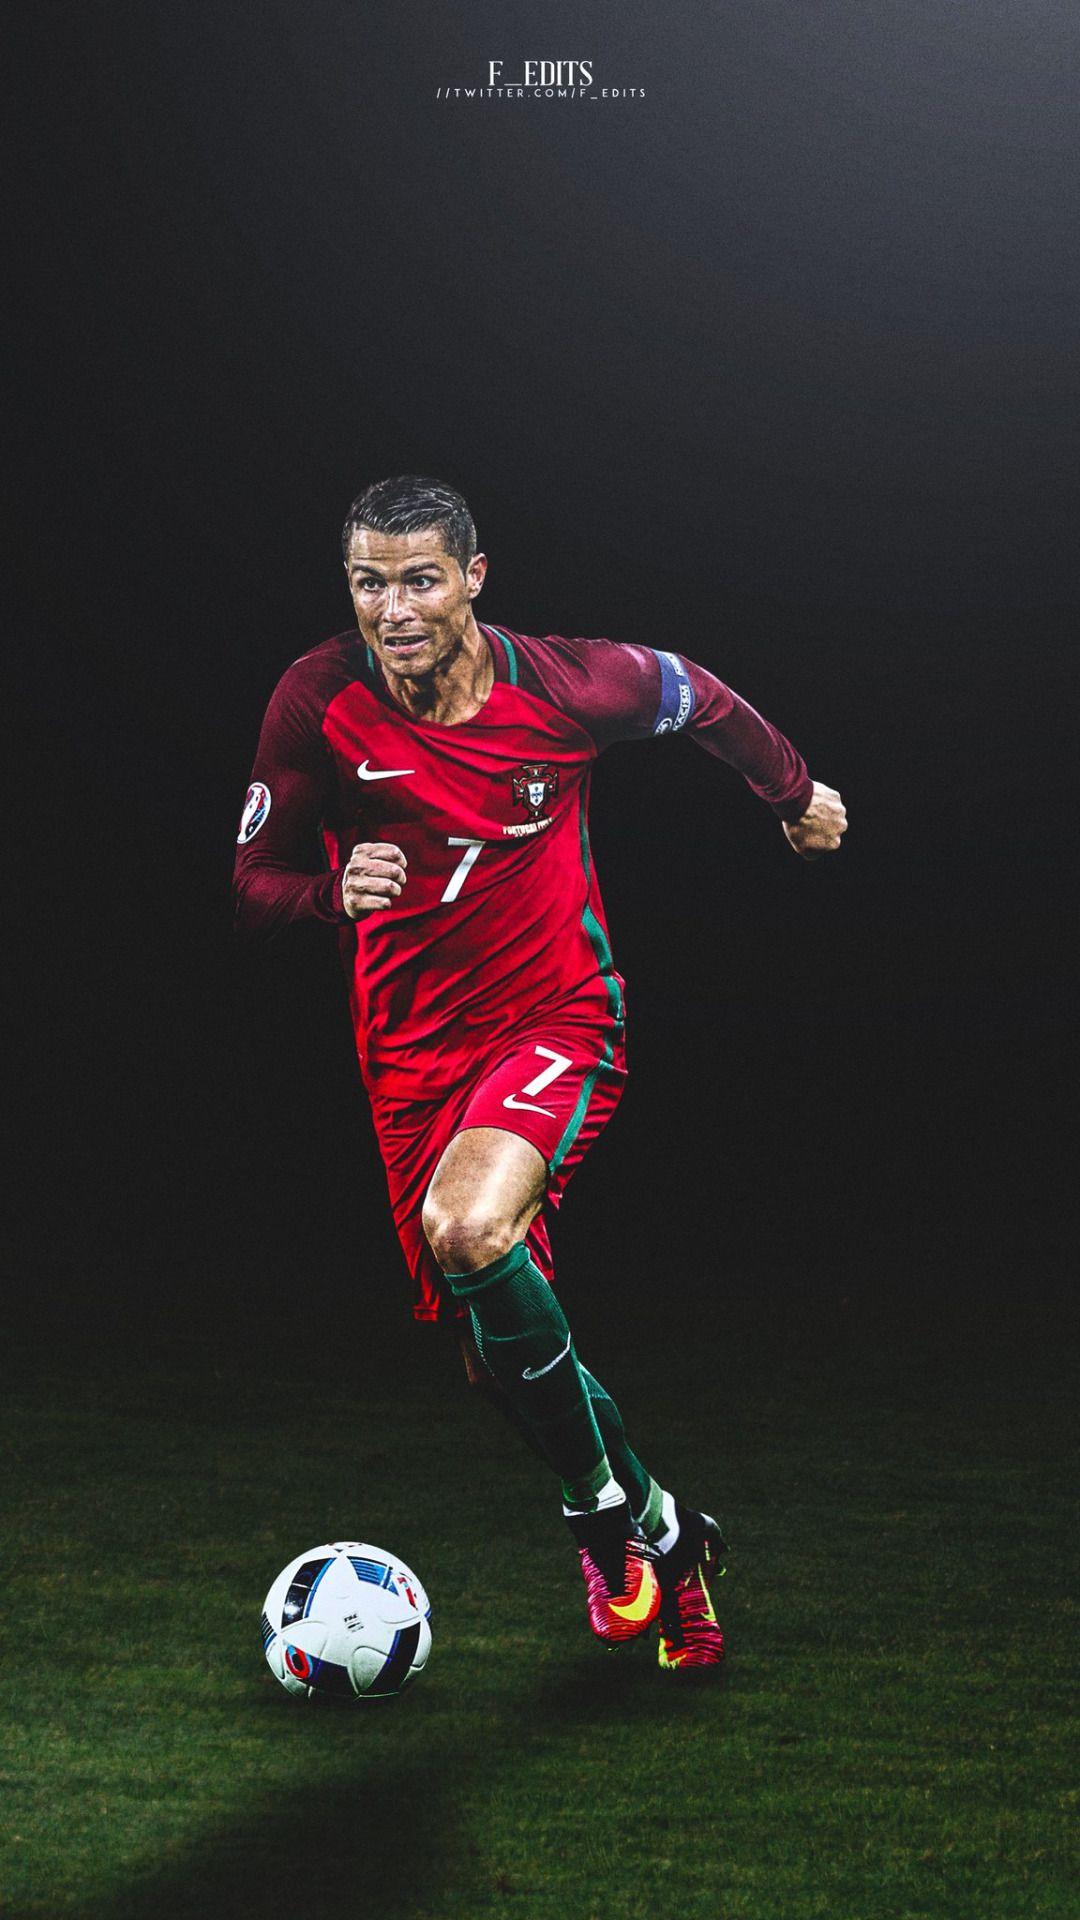 UEFA TEAM OF THE YEAR. Striker. Cristiano Ronaldo mobile